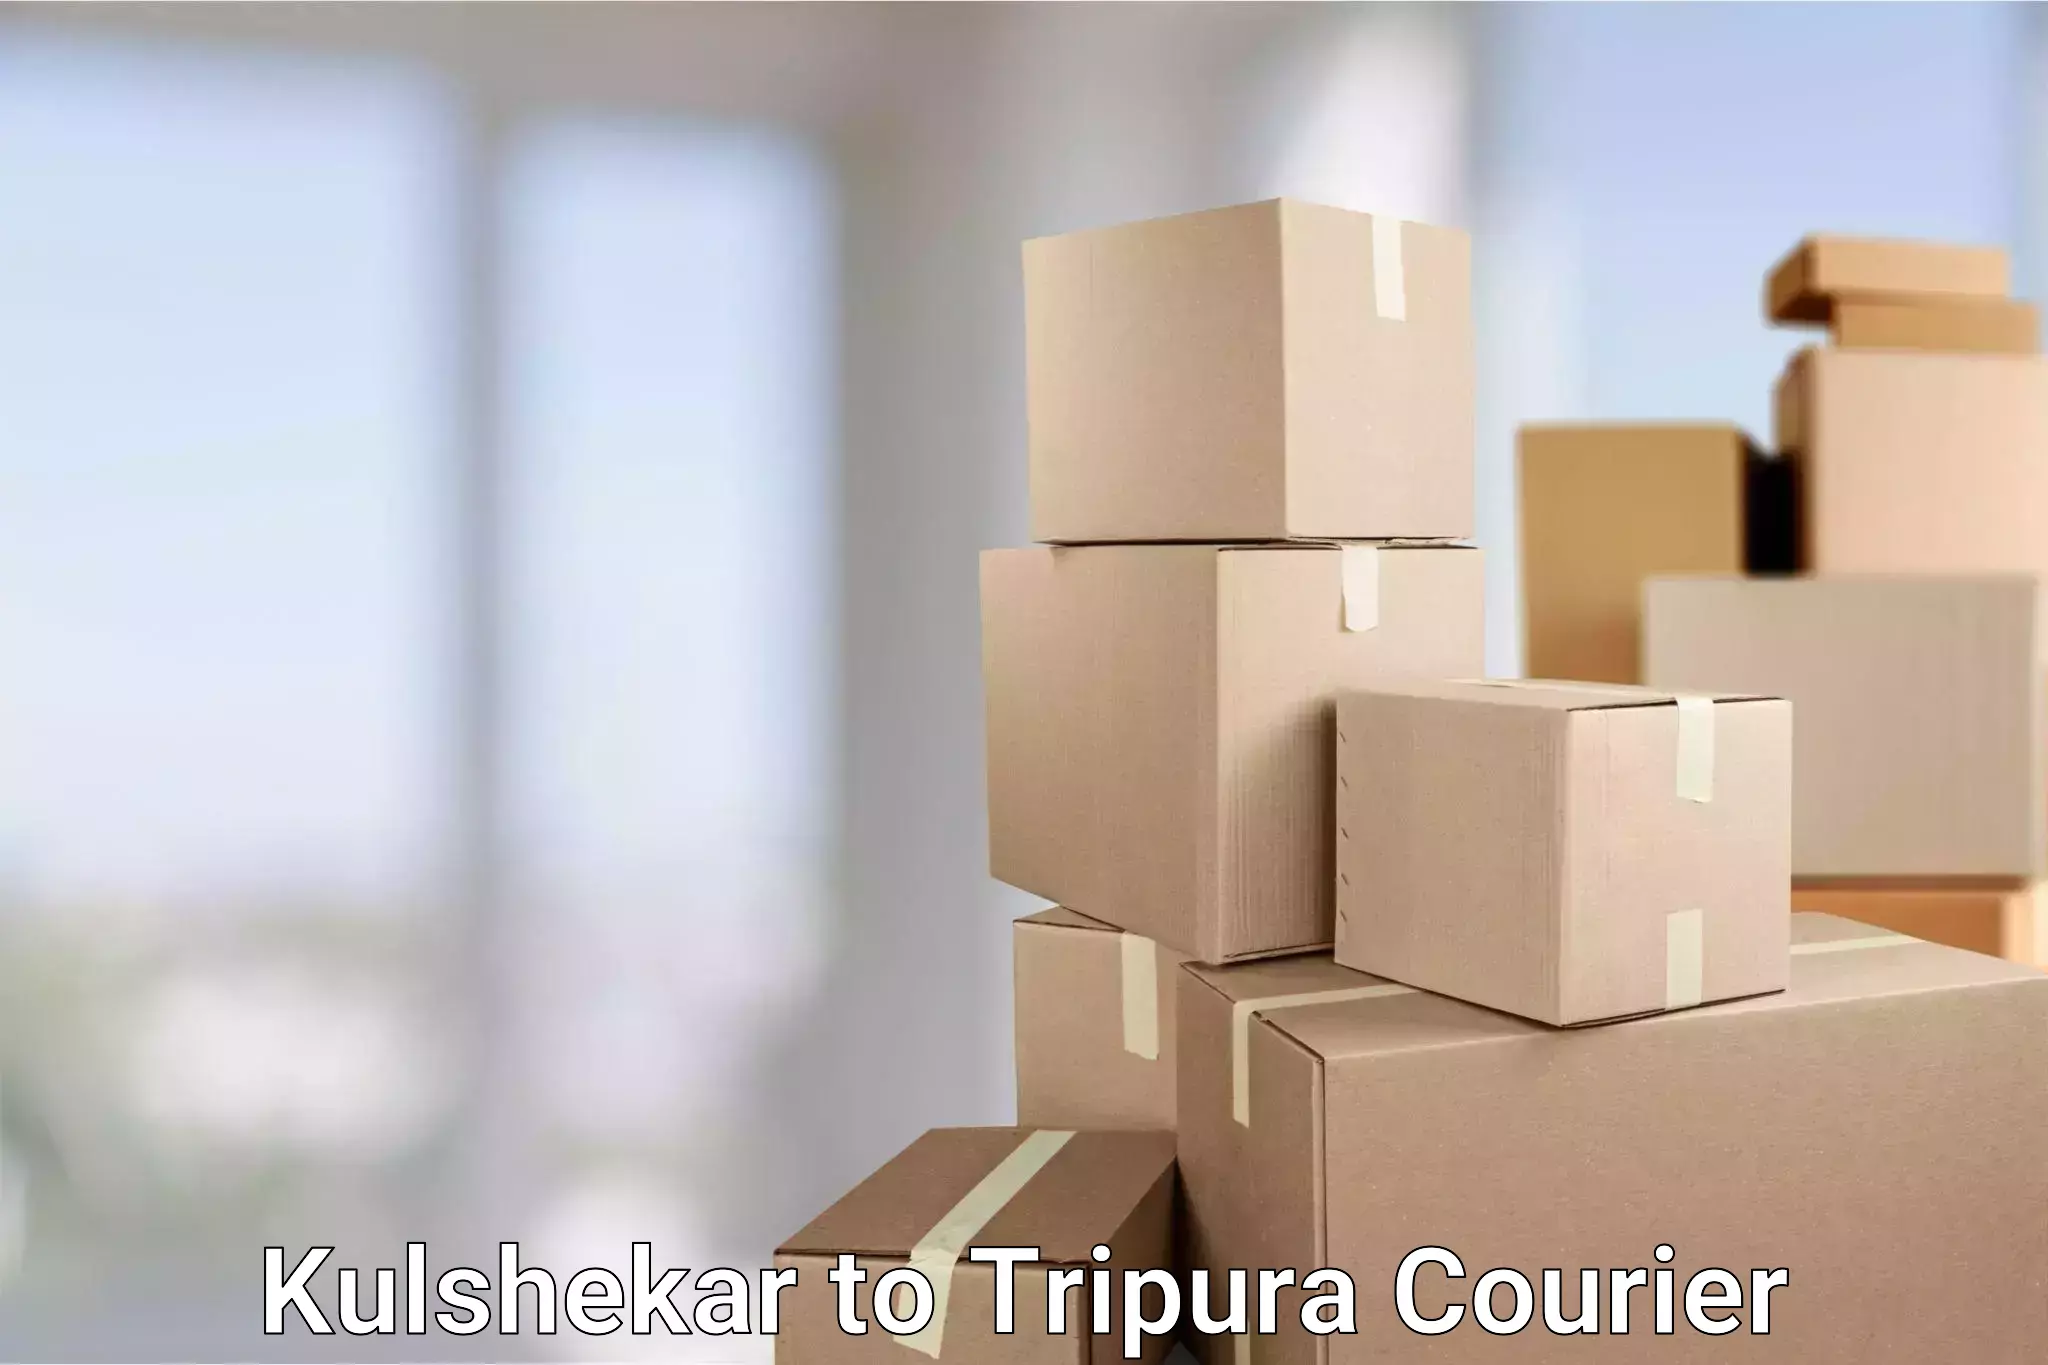 Customizable delivery plans Kulshekar to Udaipur Tripura